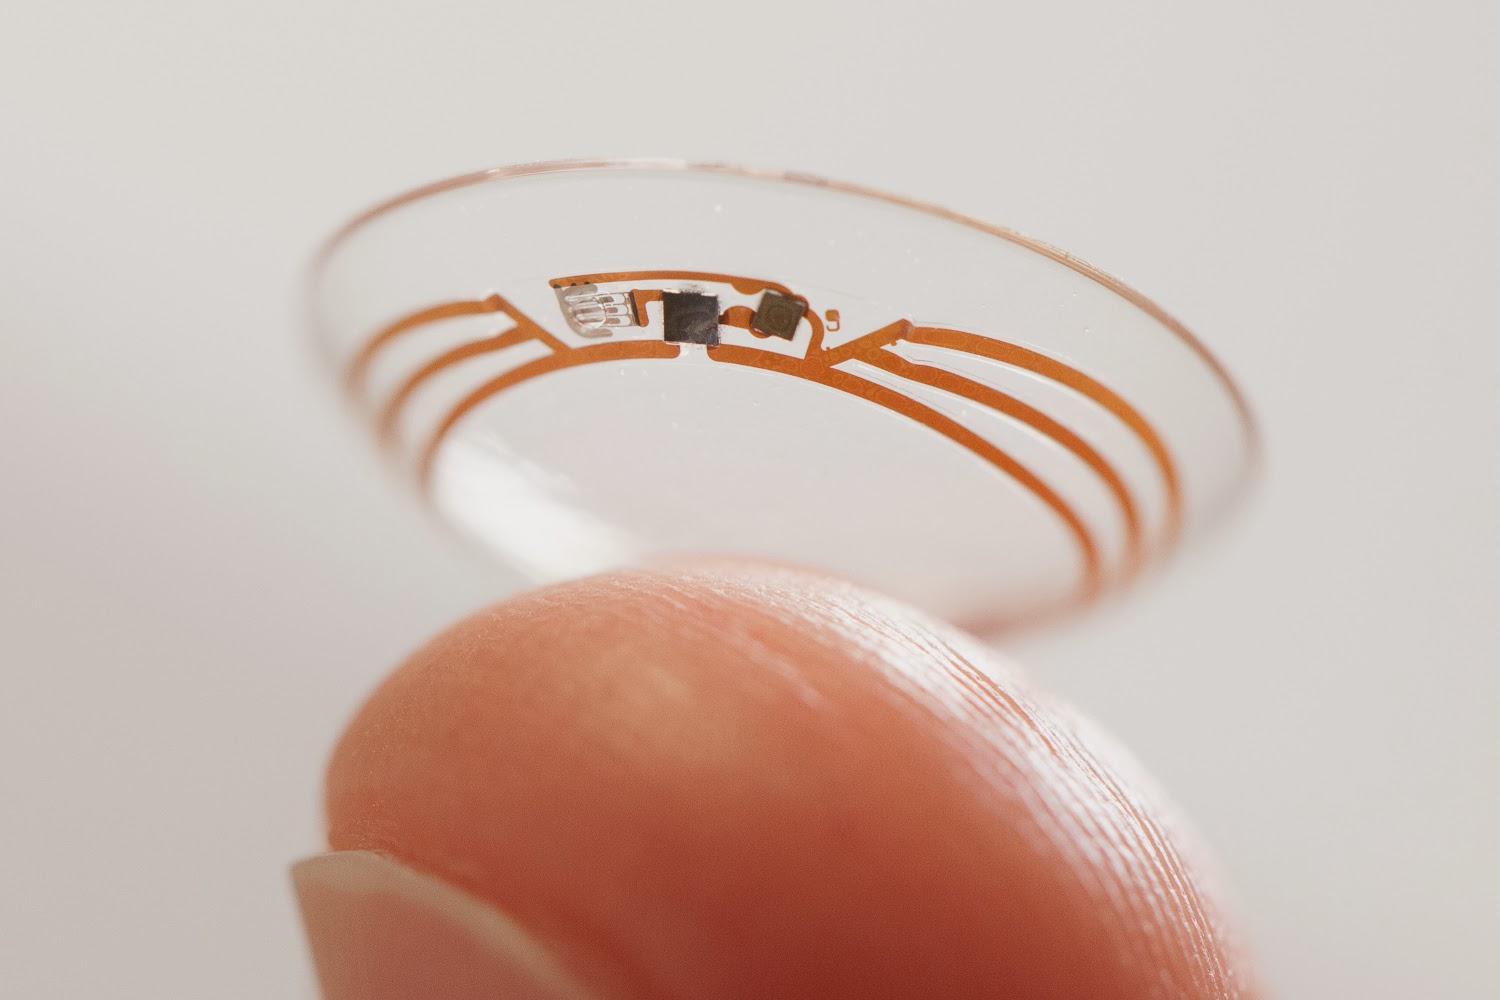 google considers tiny cameras for contact lenses smart lens